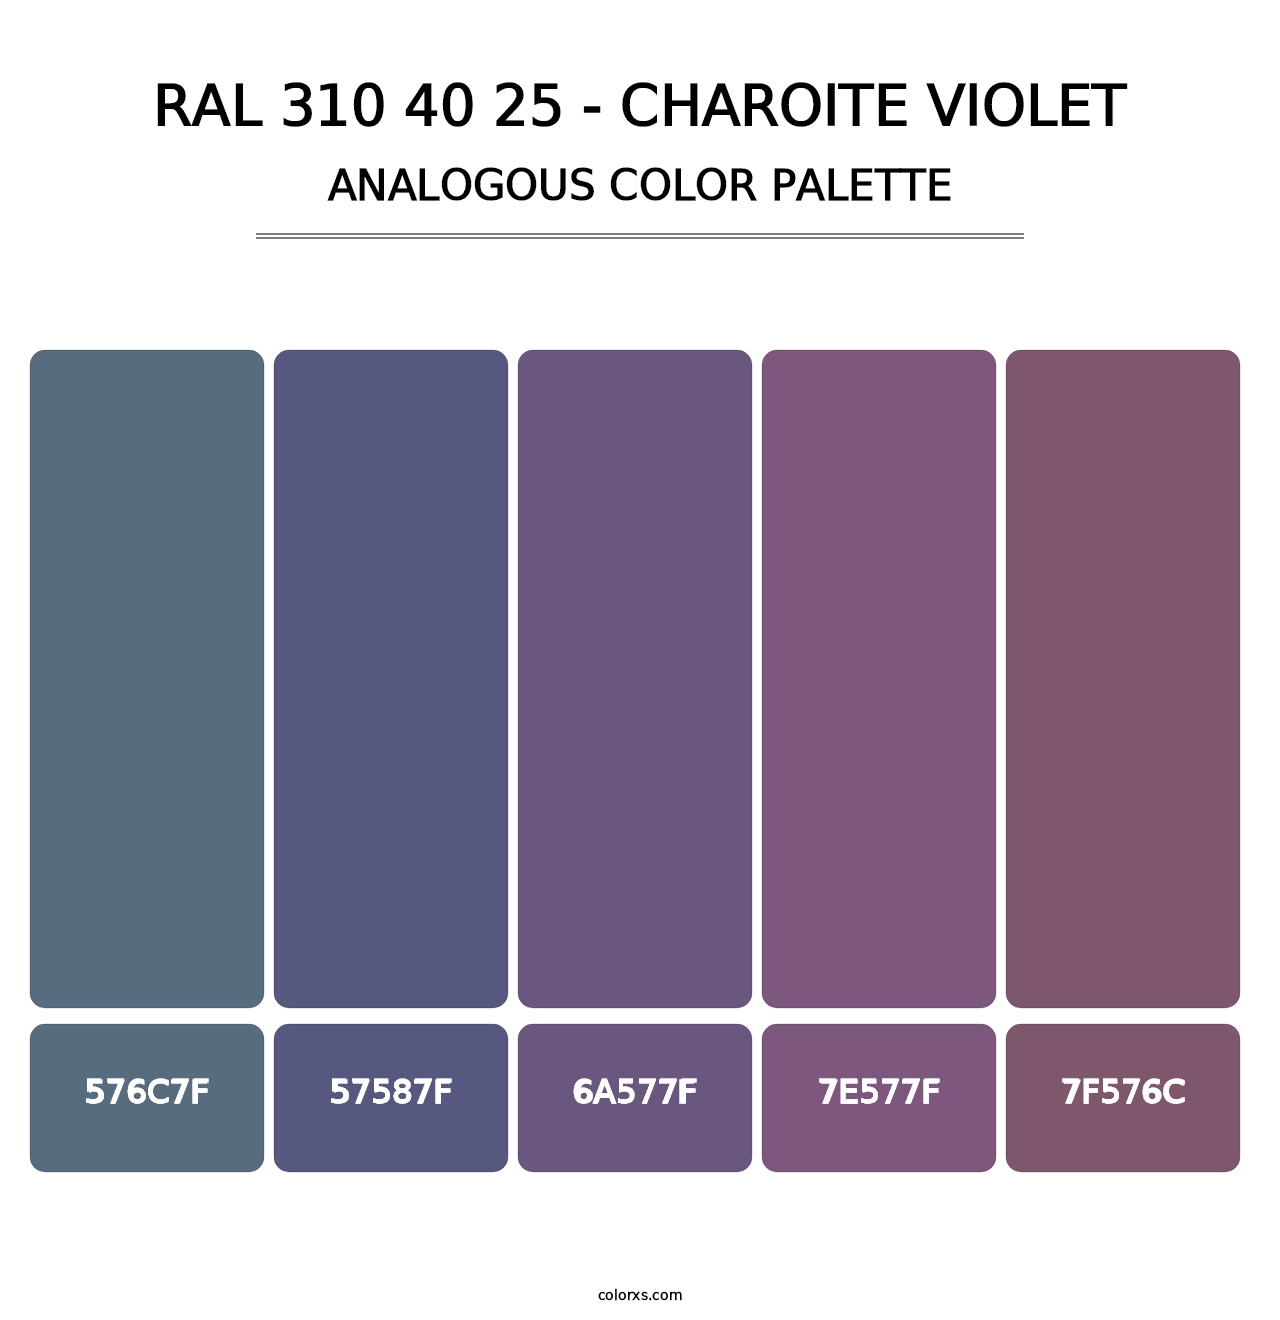 RAL 310 40 25 - Charoite Violet - Analogous Color Palette